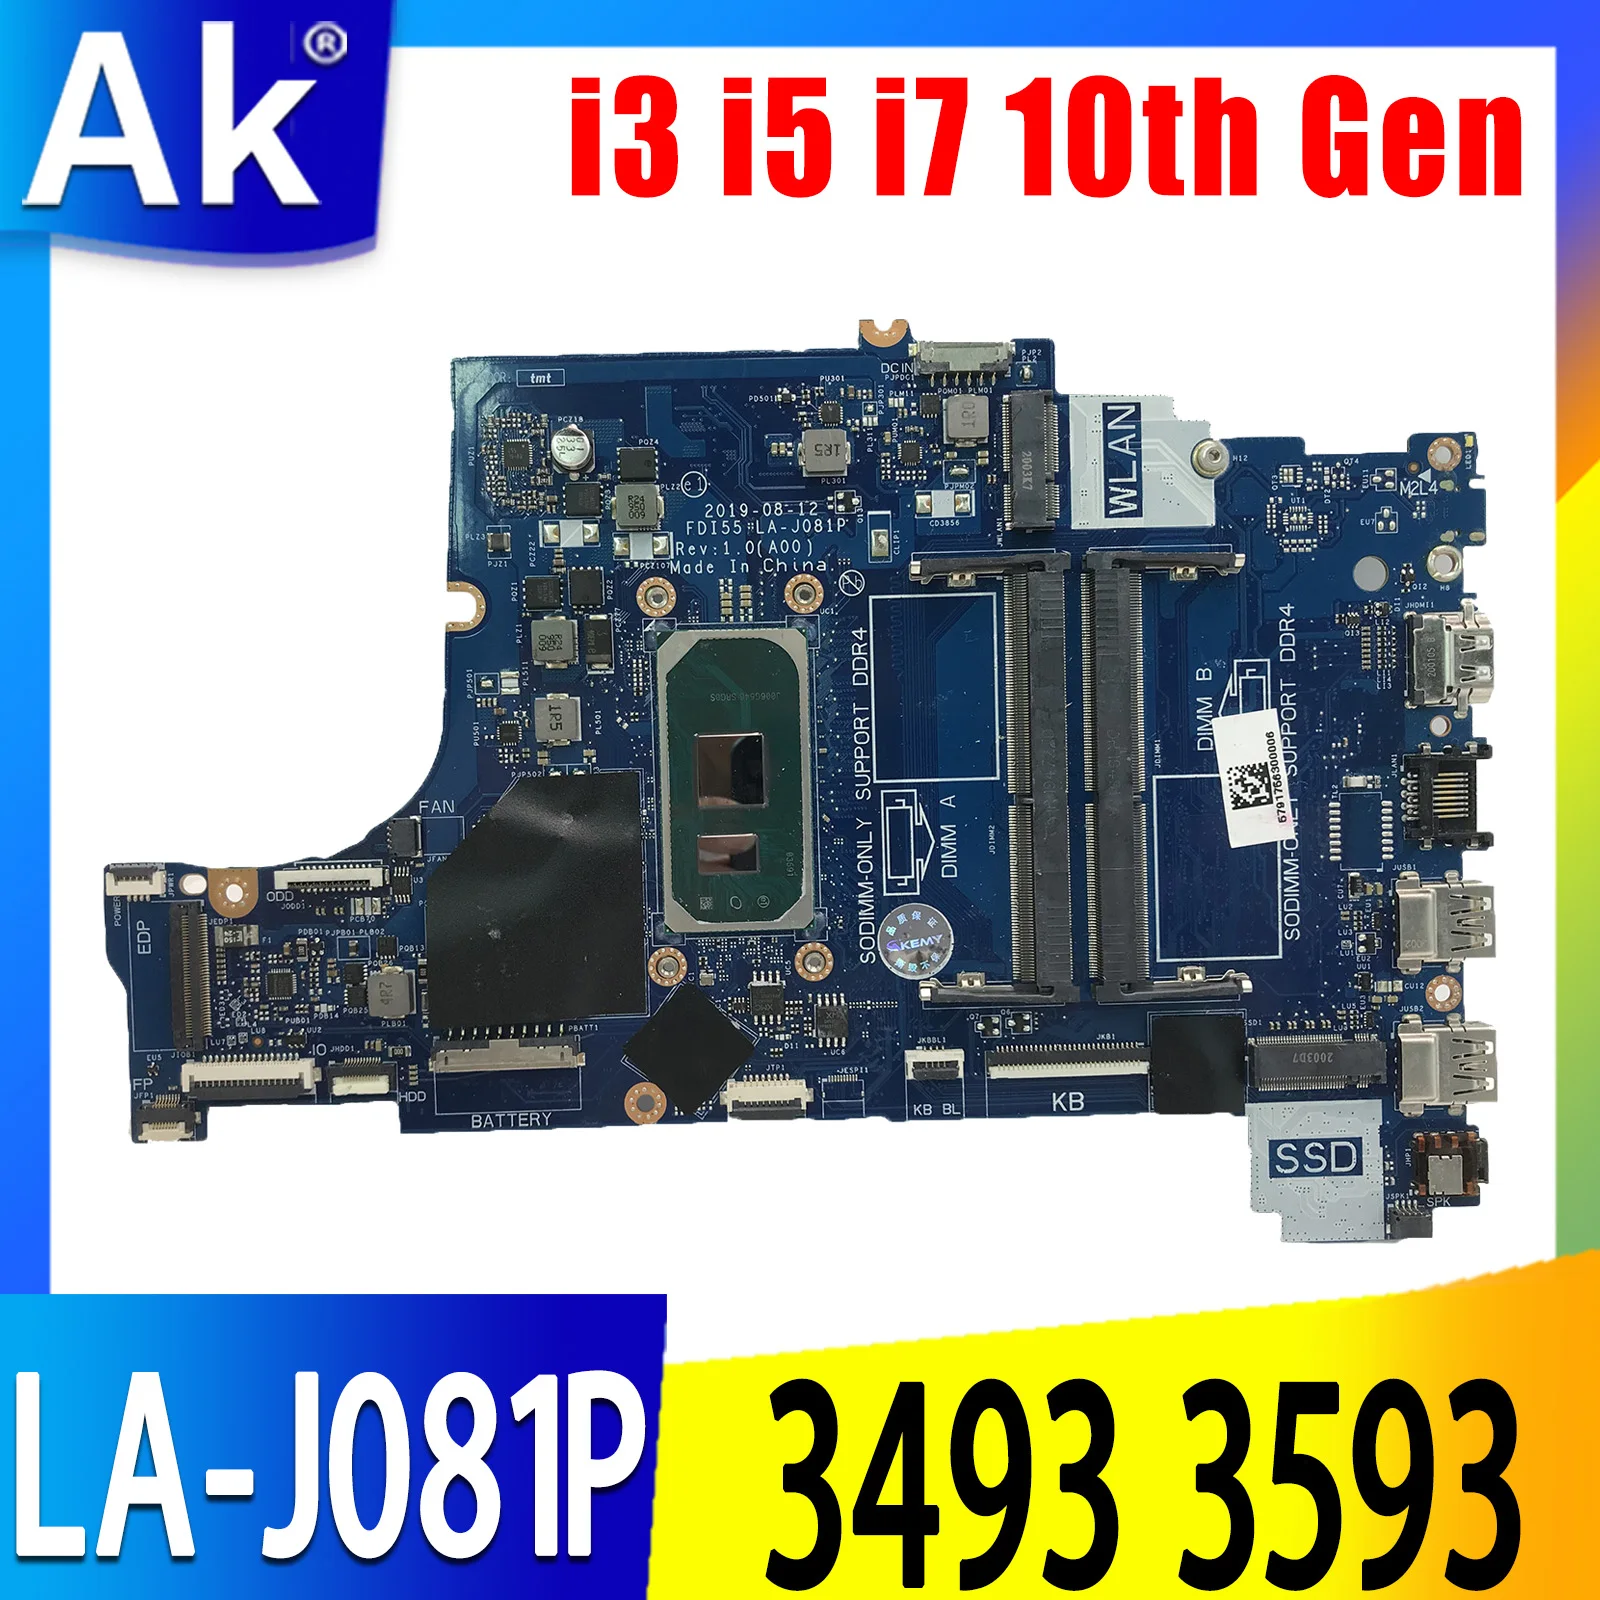 

for DELL Inspiron 3493 3593 Laptop pc motherboard LA-J081P CN-047MF0 004C38 3DD3K mainboard w/ i3-1005G1 I5-1035G1 I7-1065G7 CPU